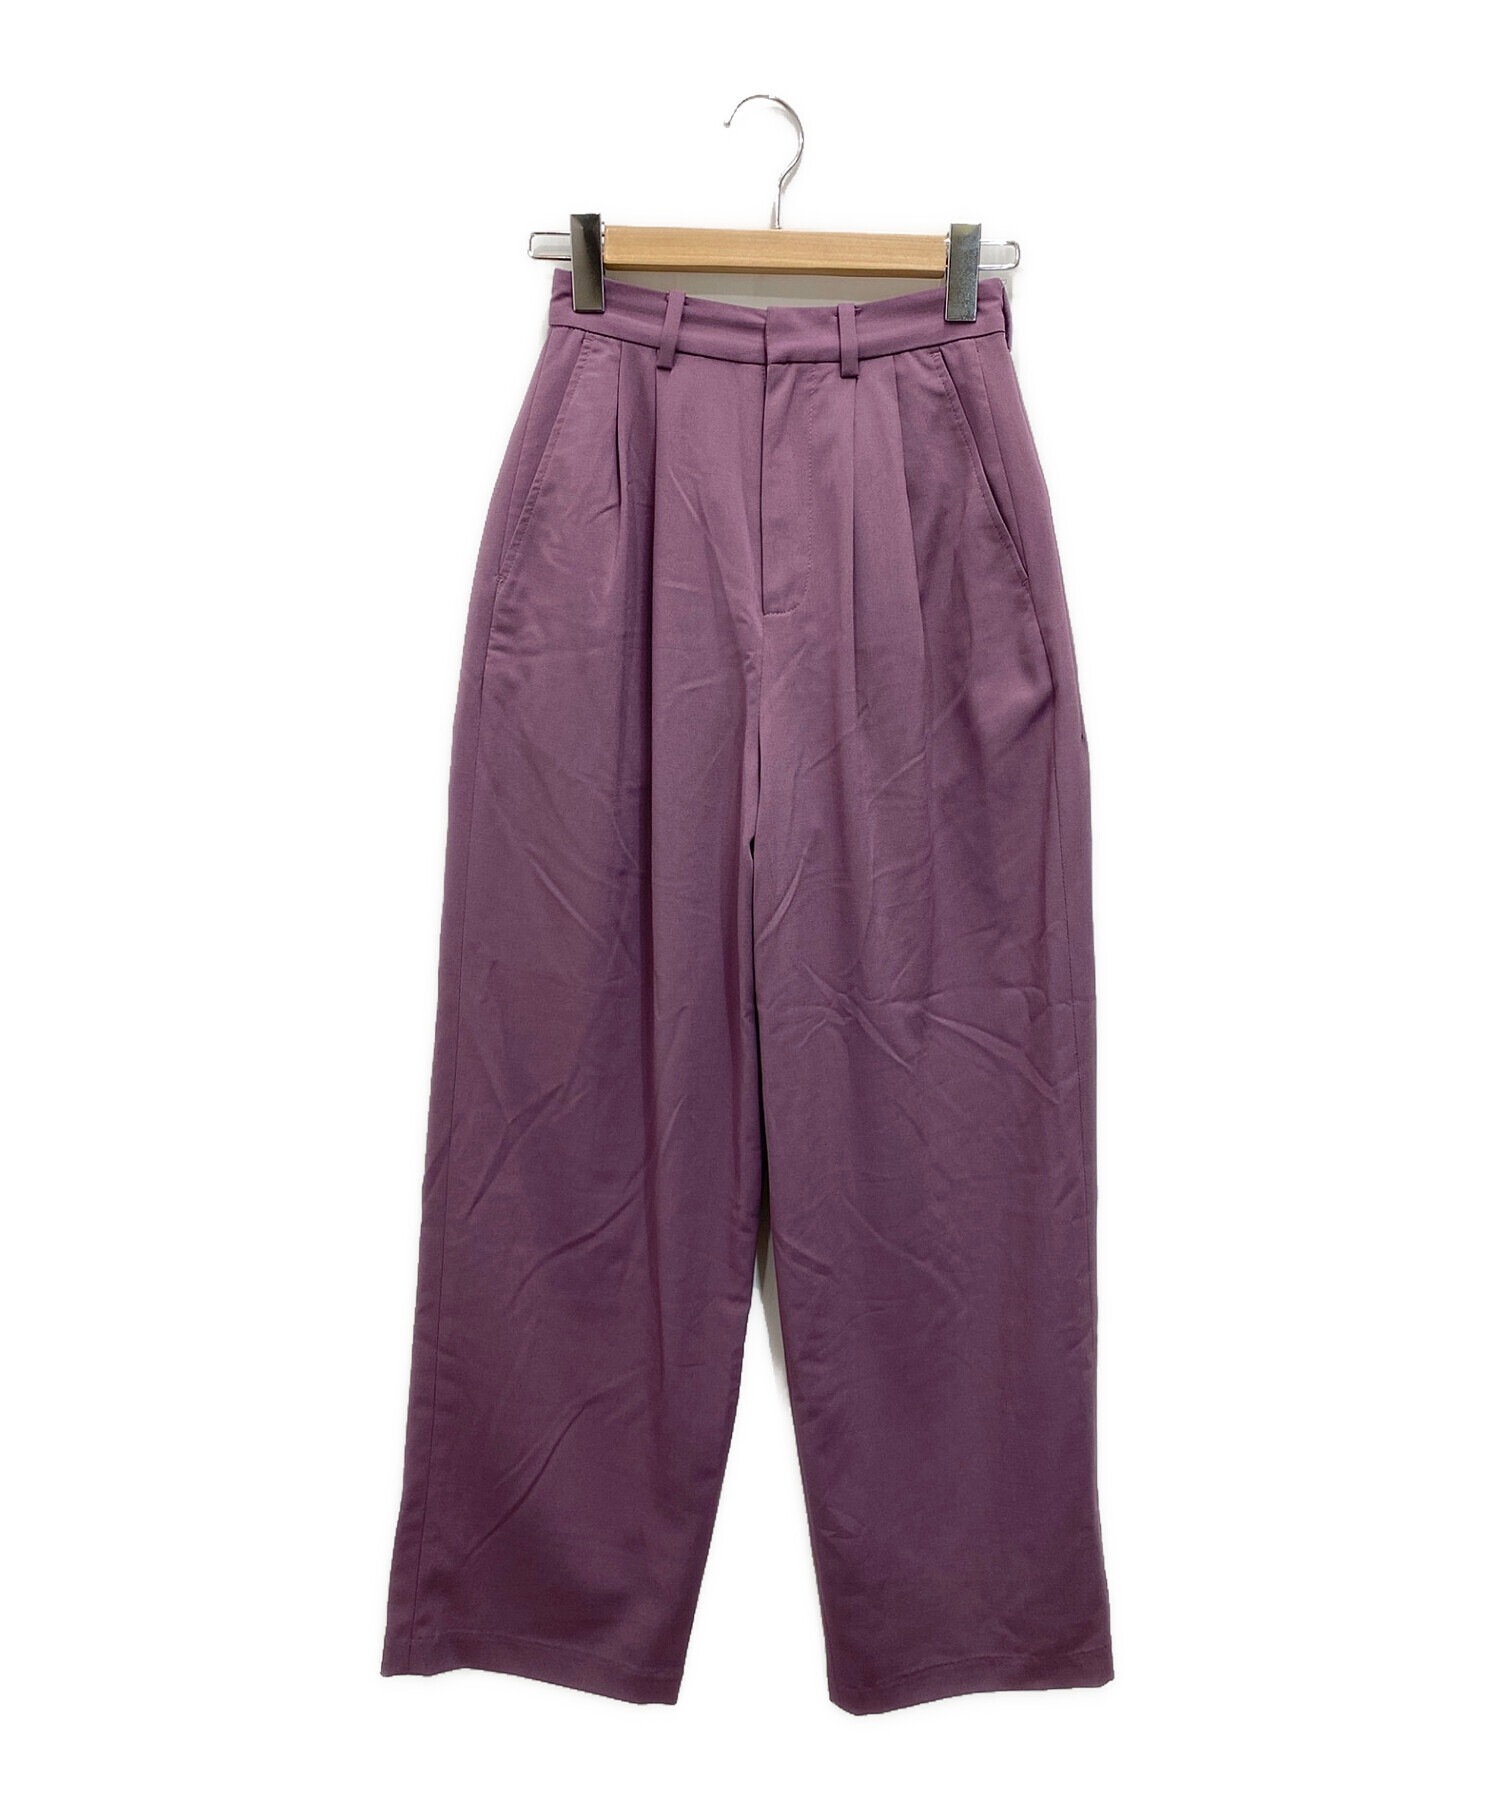 CLANE Basic tuck pants purple - カジュアルパンツ